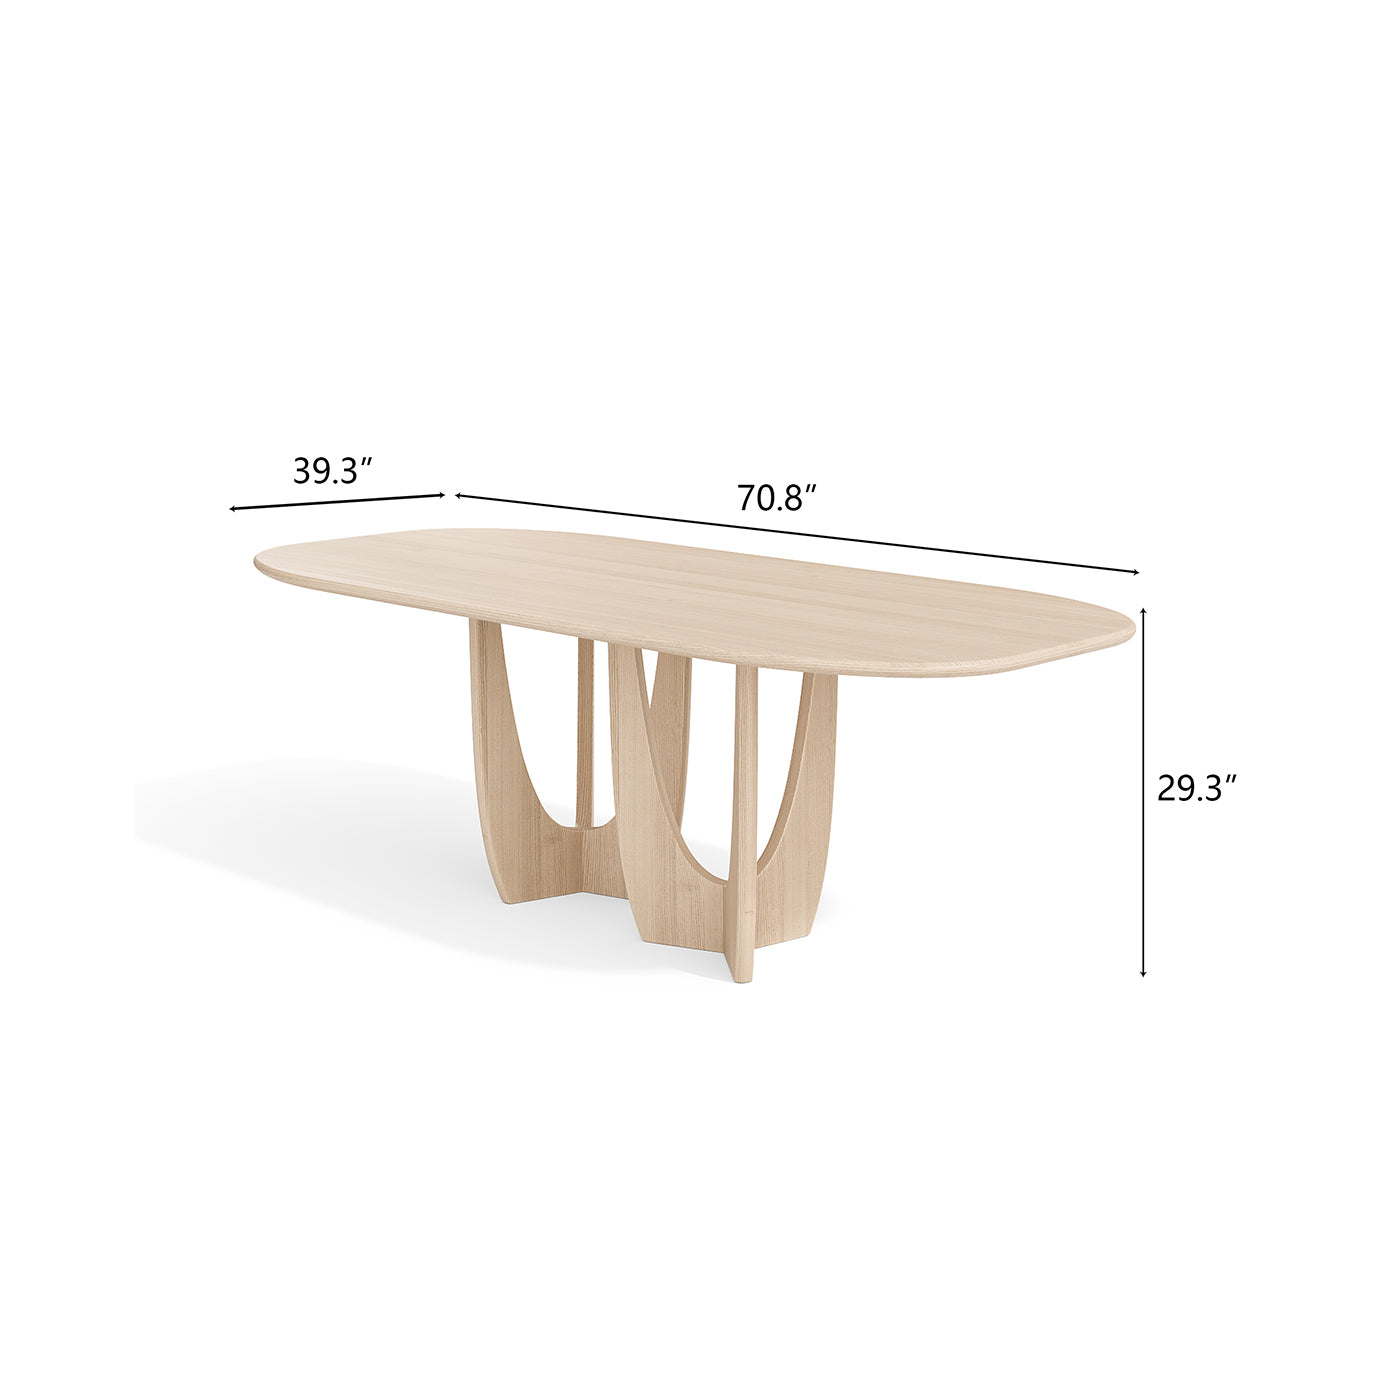 Modern Light Wood Wood Round Tables